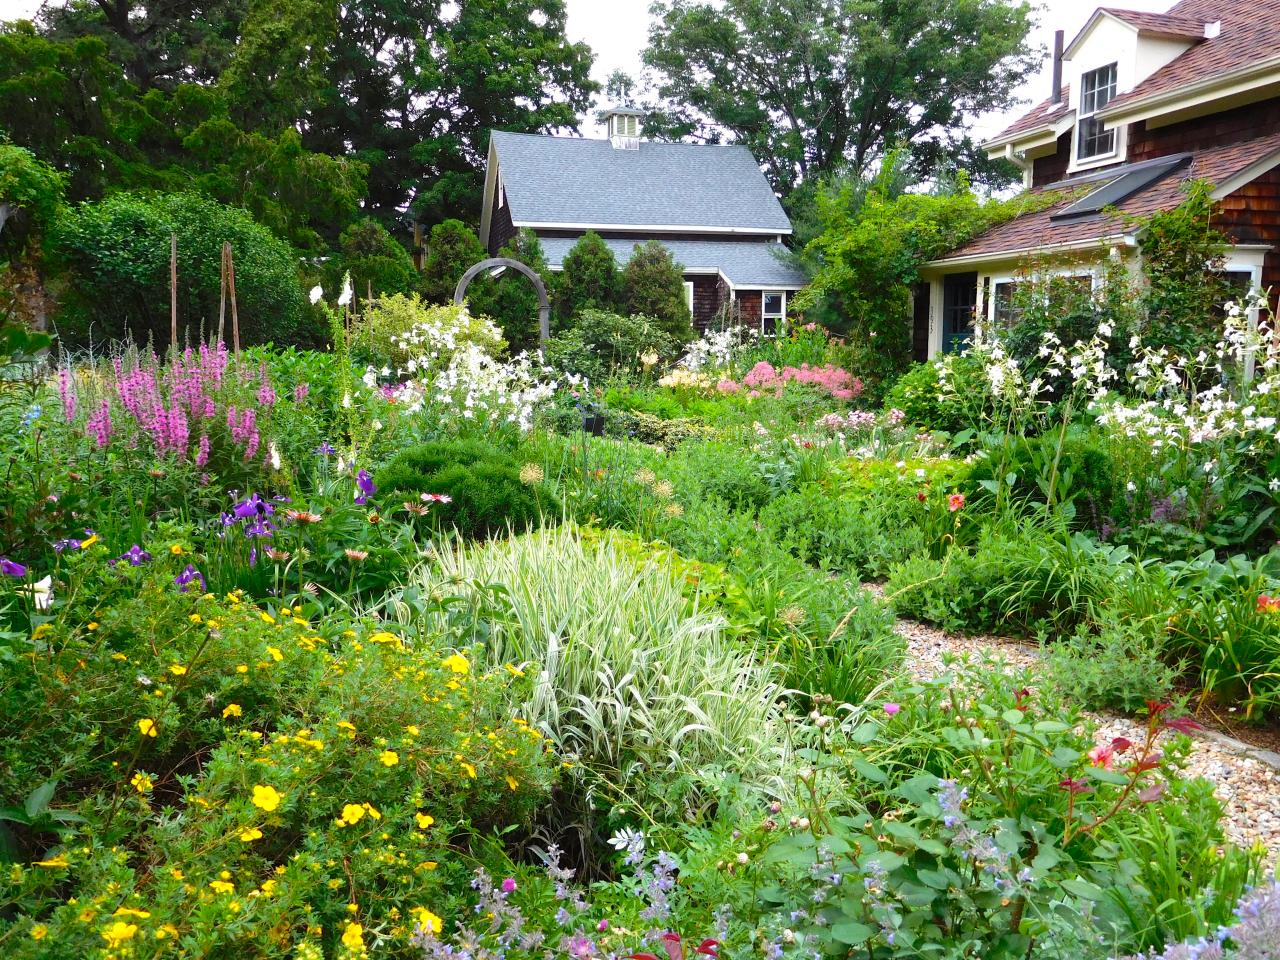 The Virginia Planting Guide 2020: Serious Gardening
